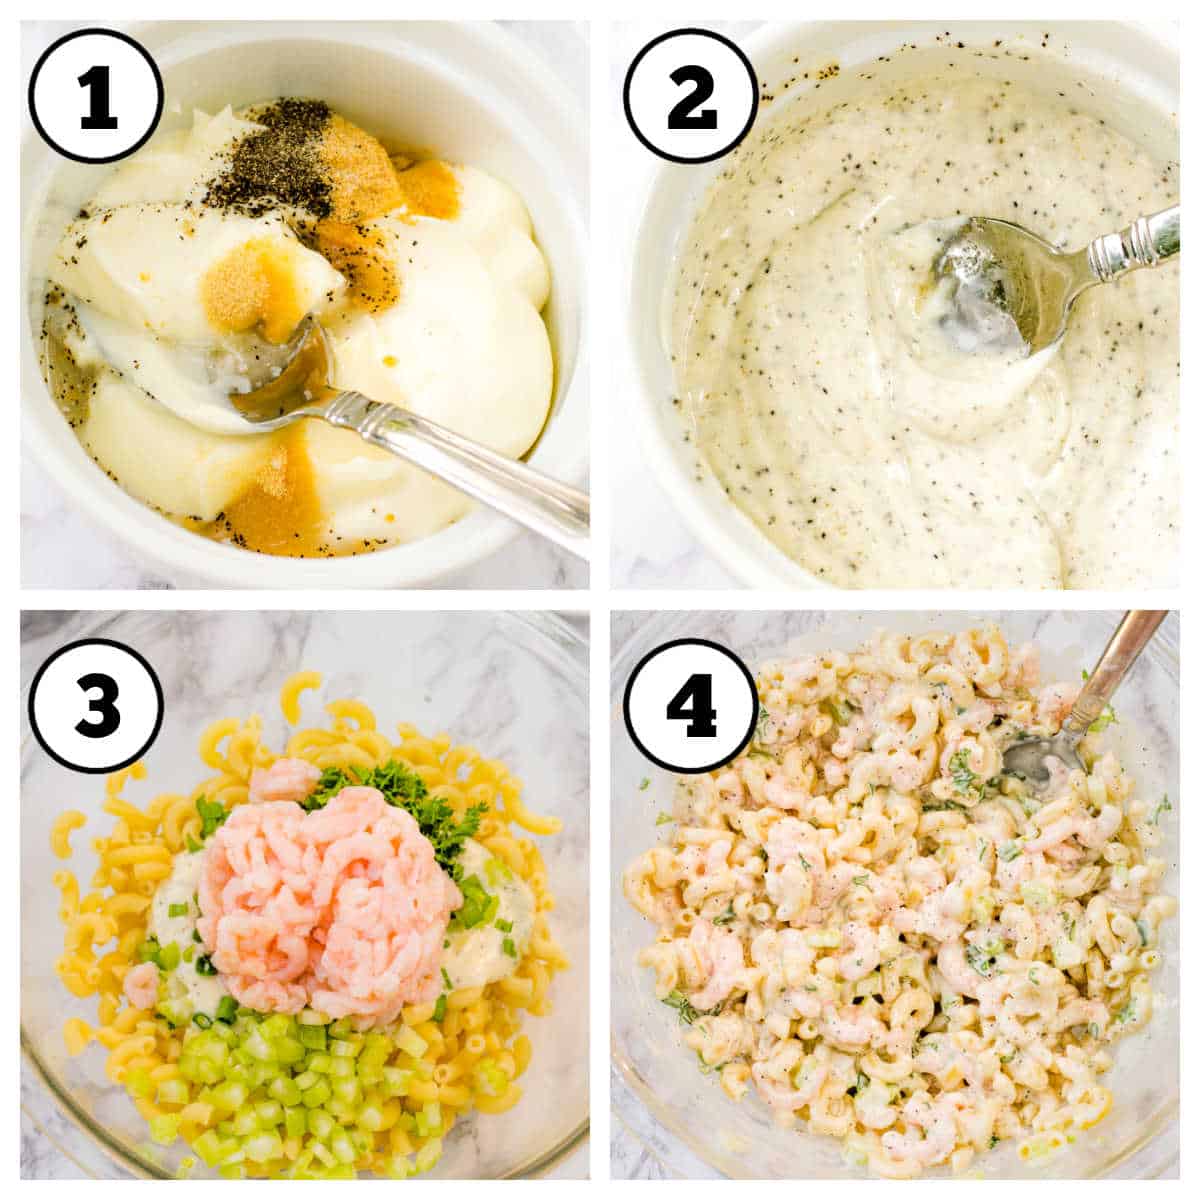 Steps 1-4 to make shrimp macaroni salad.